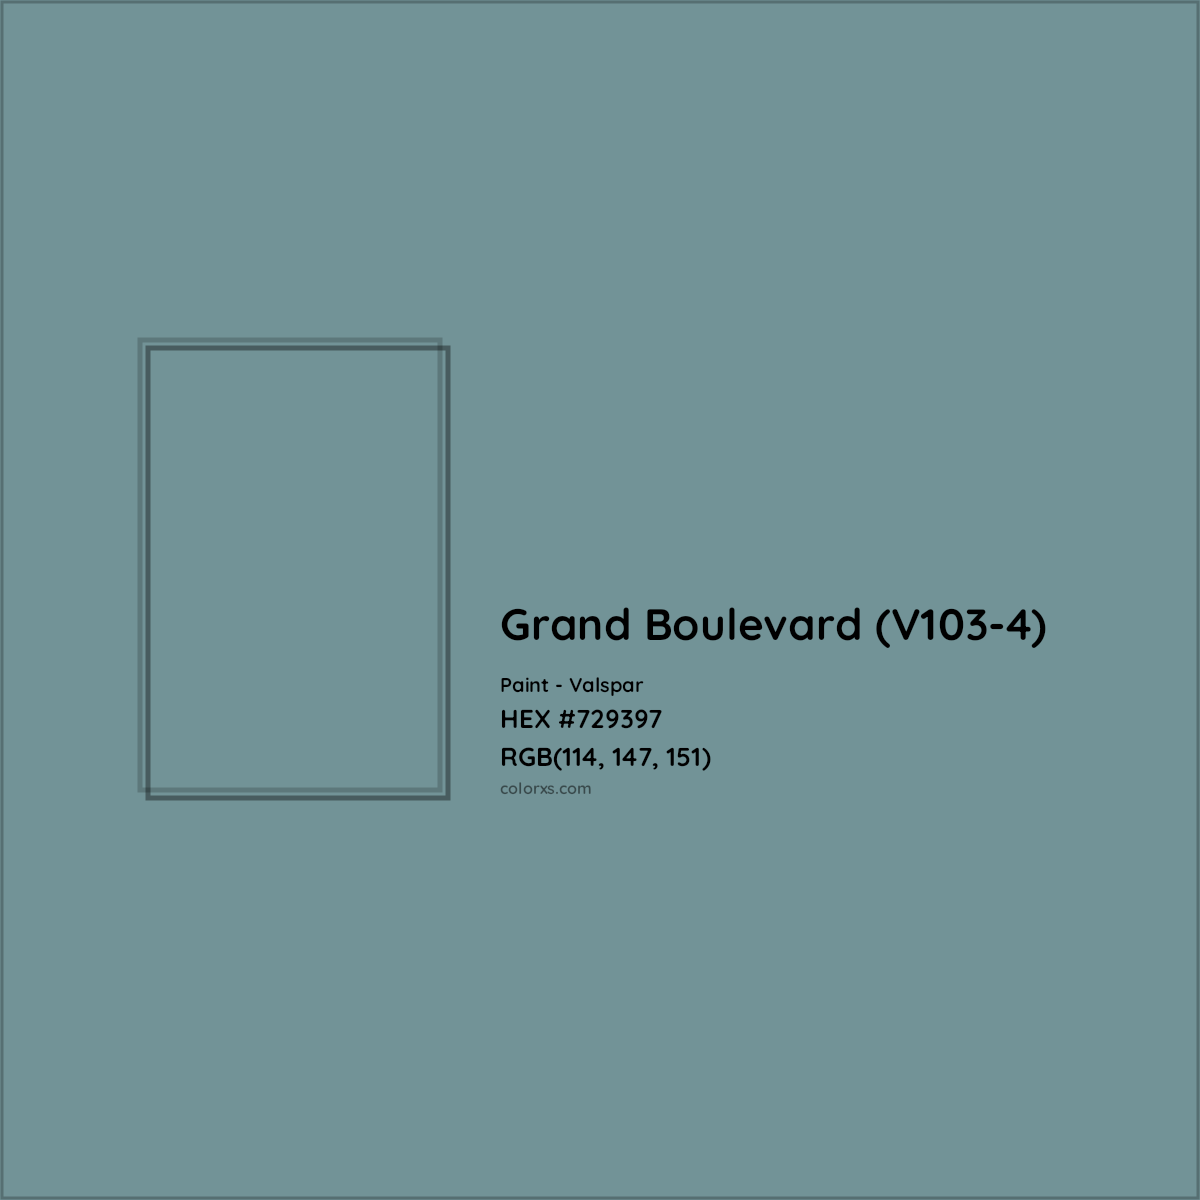 HEX #729397 Grand Boulevard (V103-4) Paint Valspar - Color Code